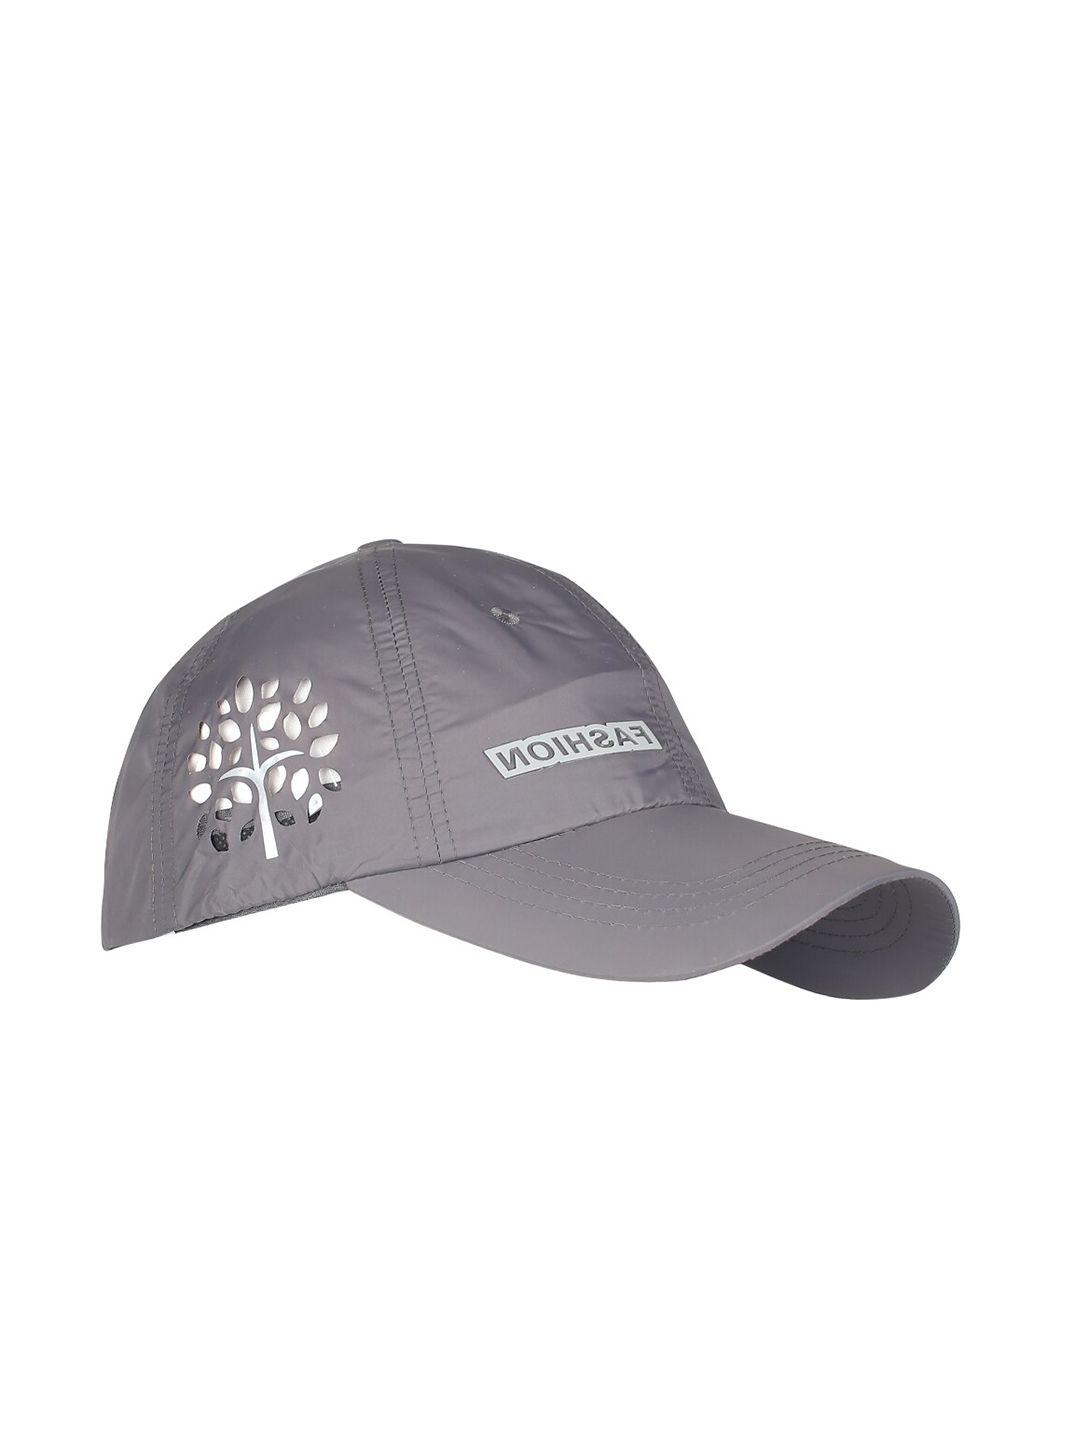 isweven grey printed snapback cap